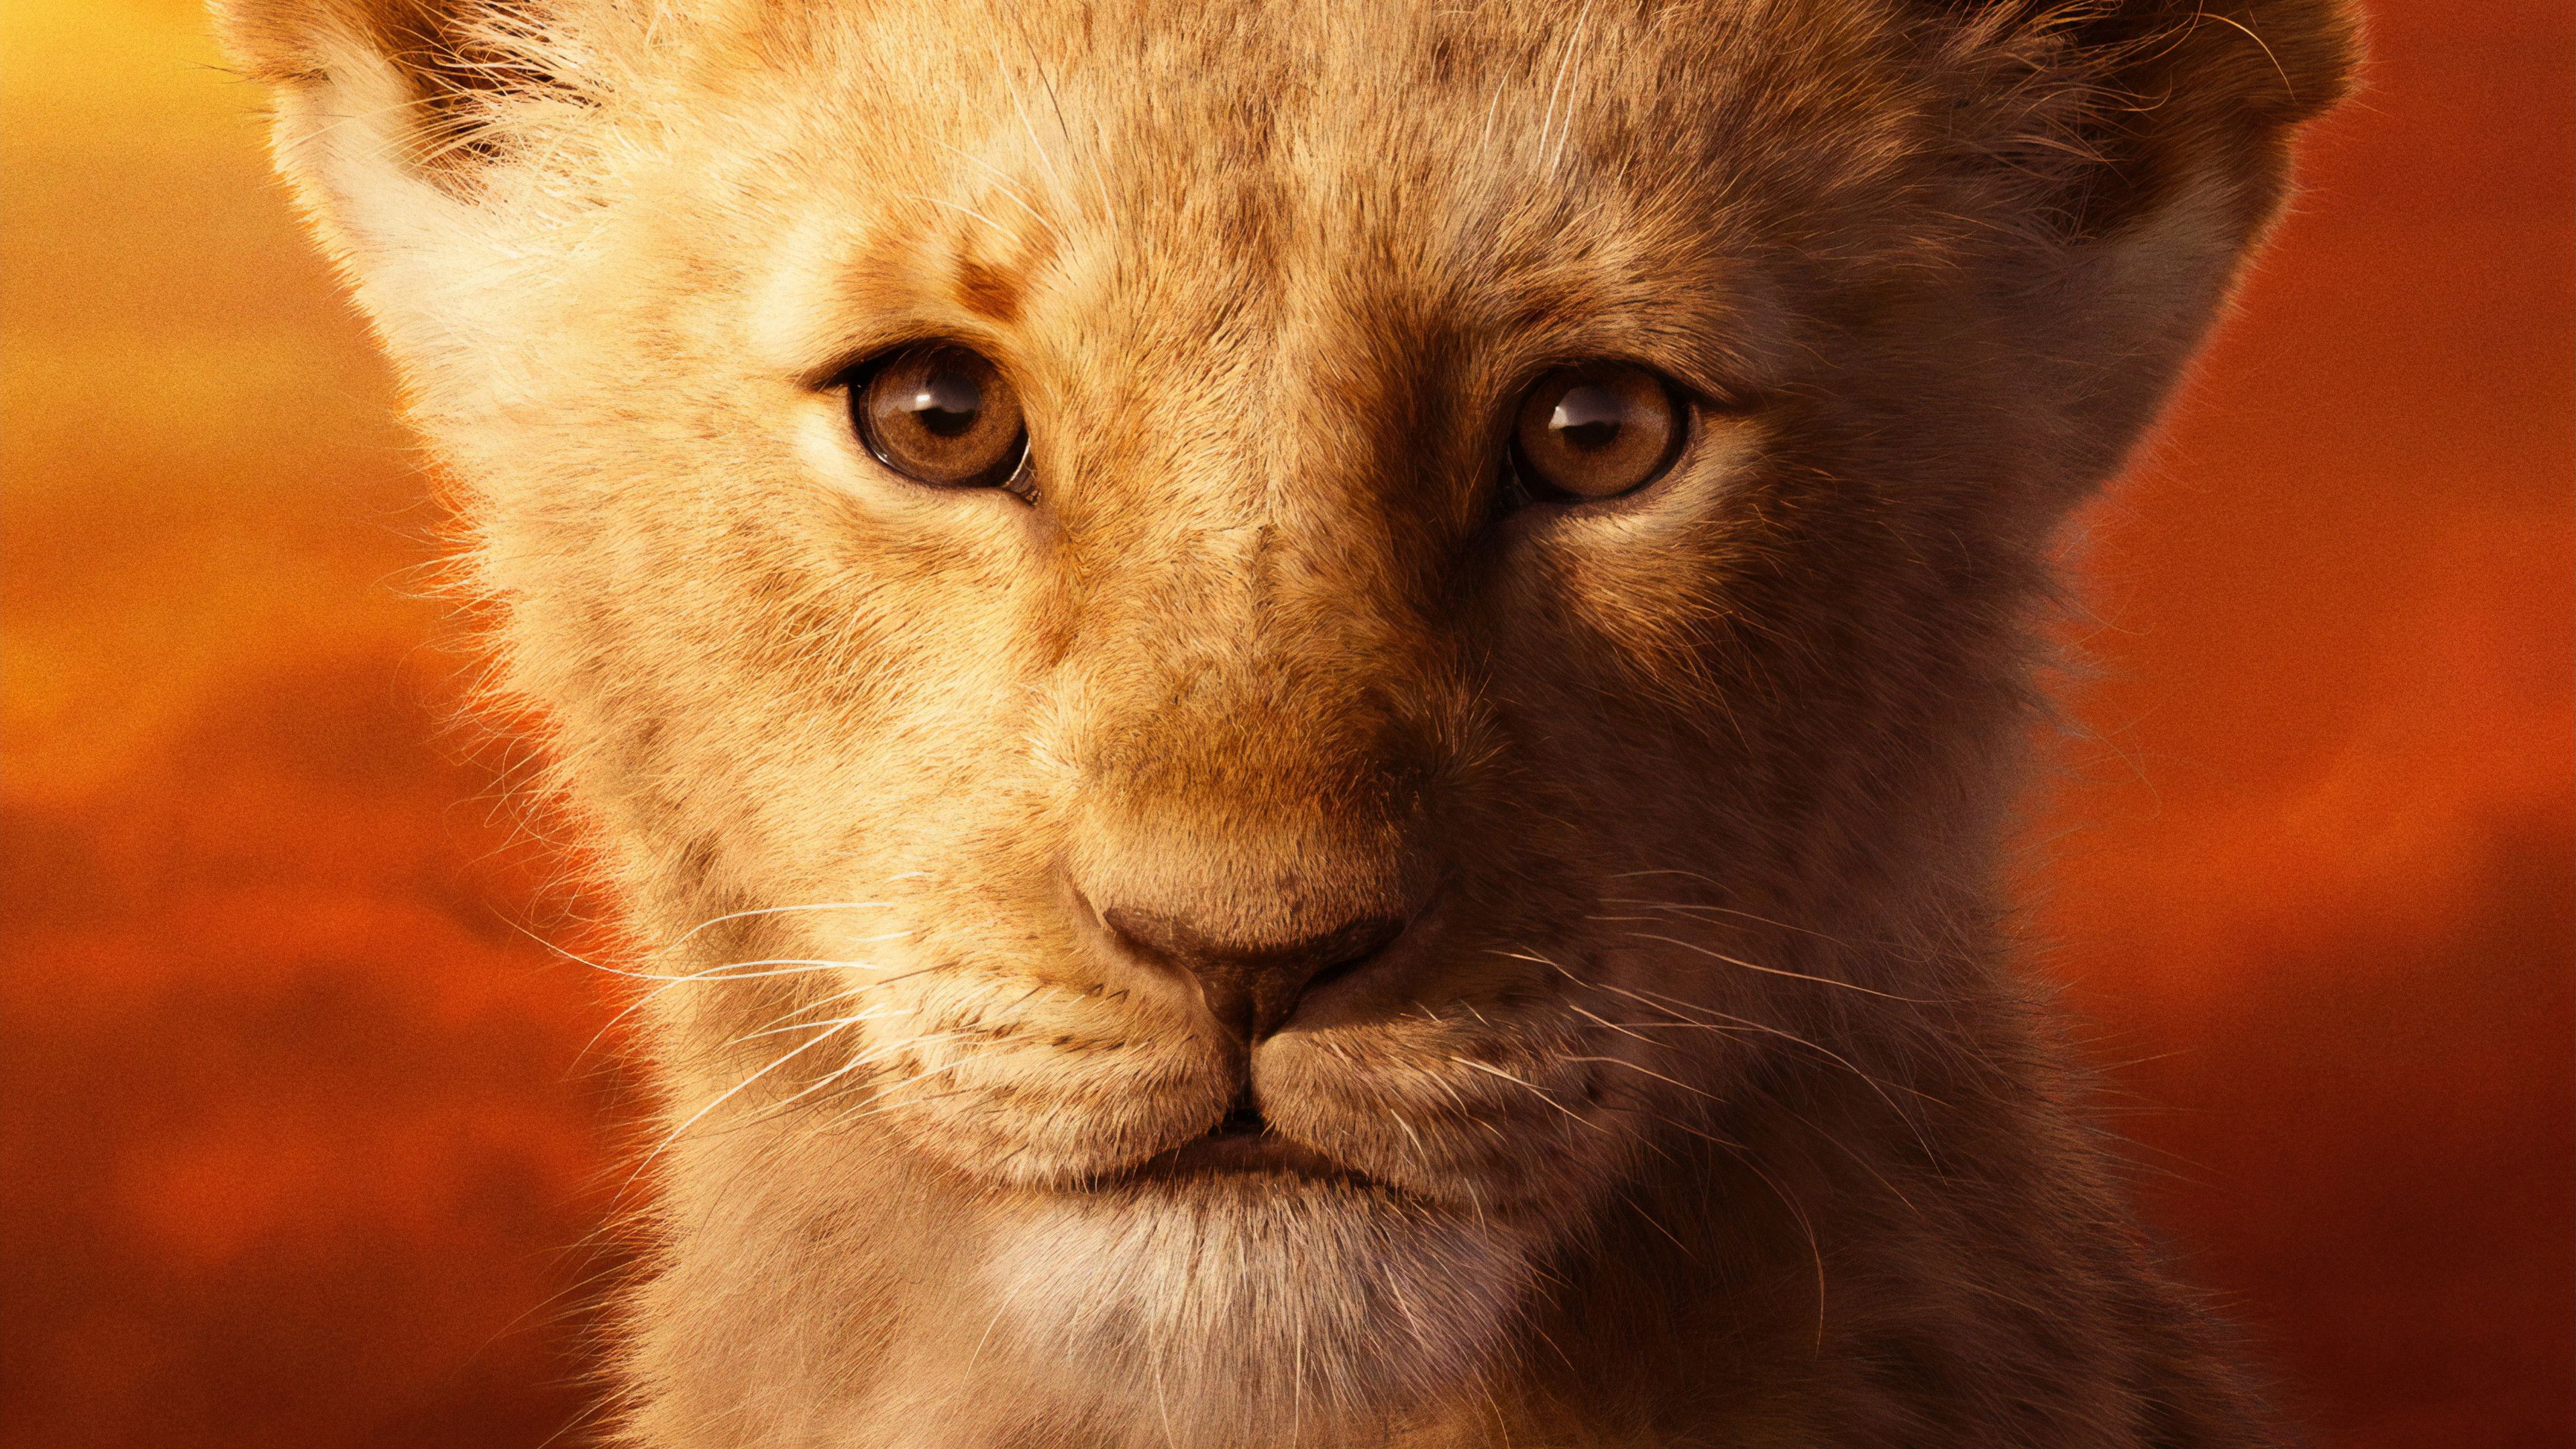 The Lion King 2019 Simba 4K Wallpapers